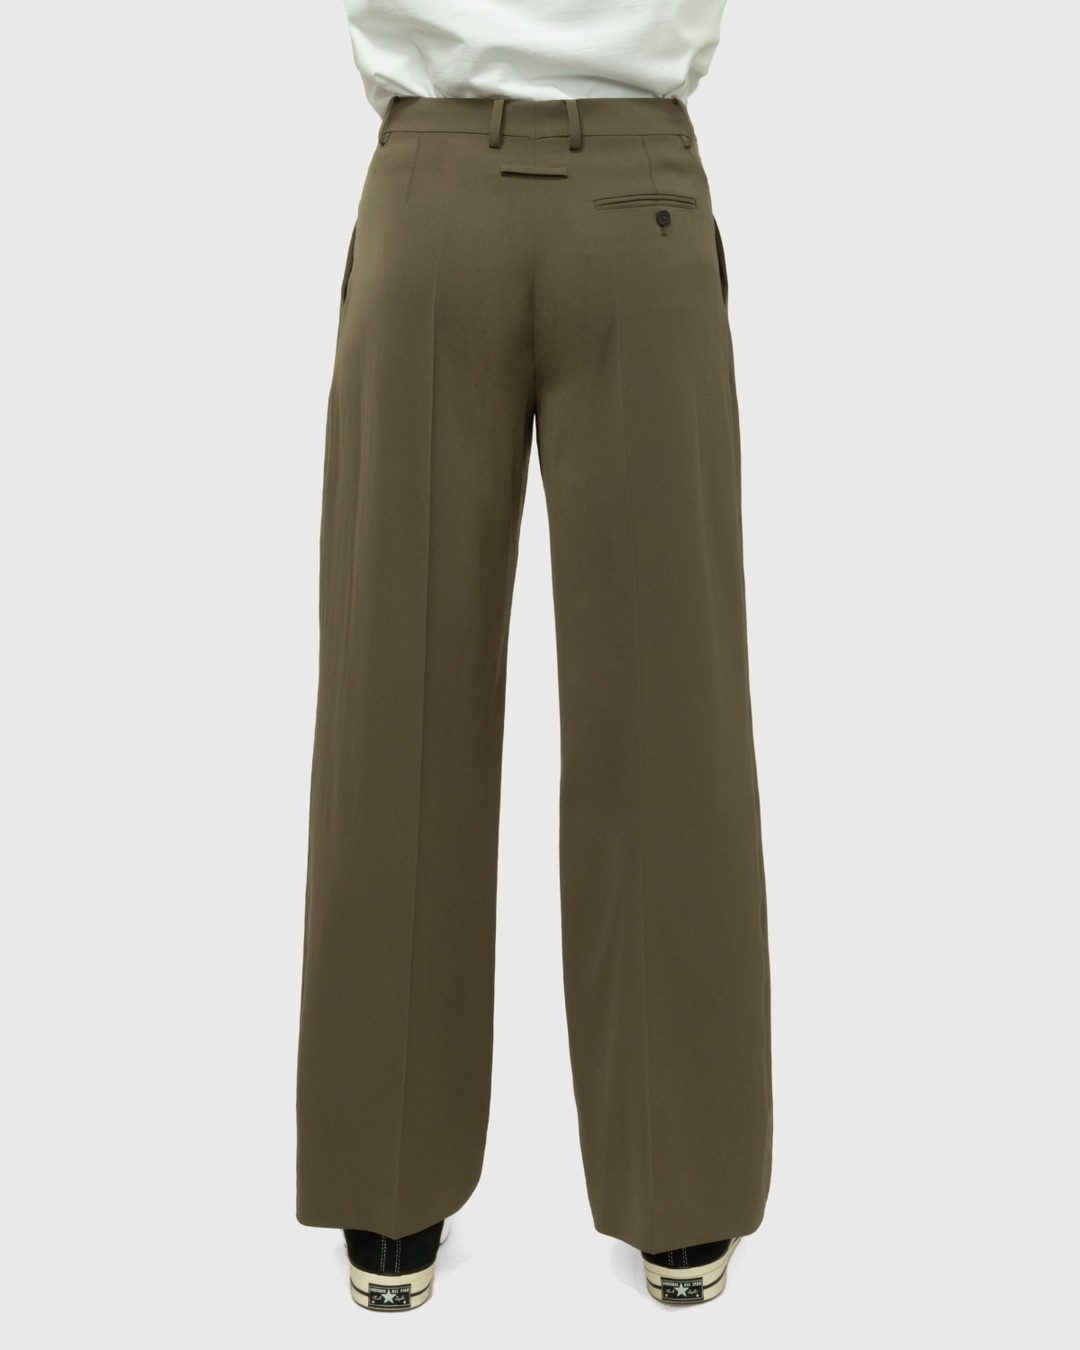 Jean Paul Gaultier – Classic Woven Trouser Khaki - Trousers - Brown - Image 3